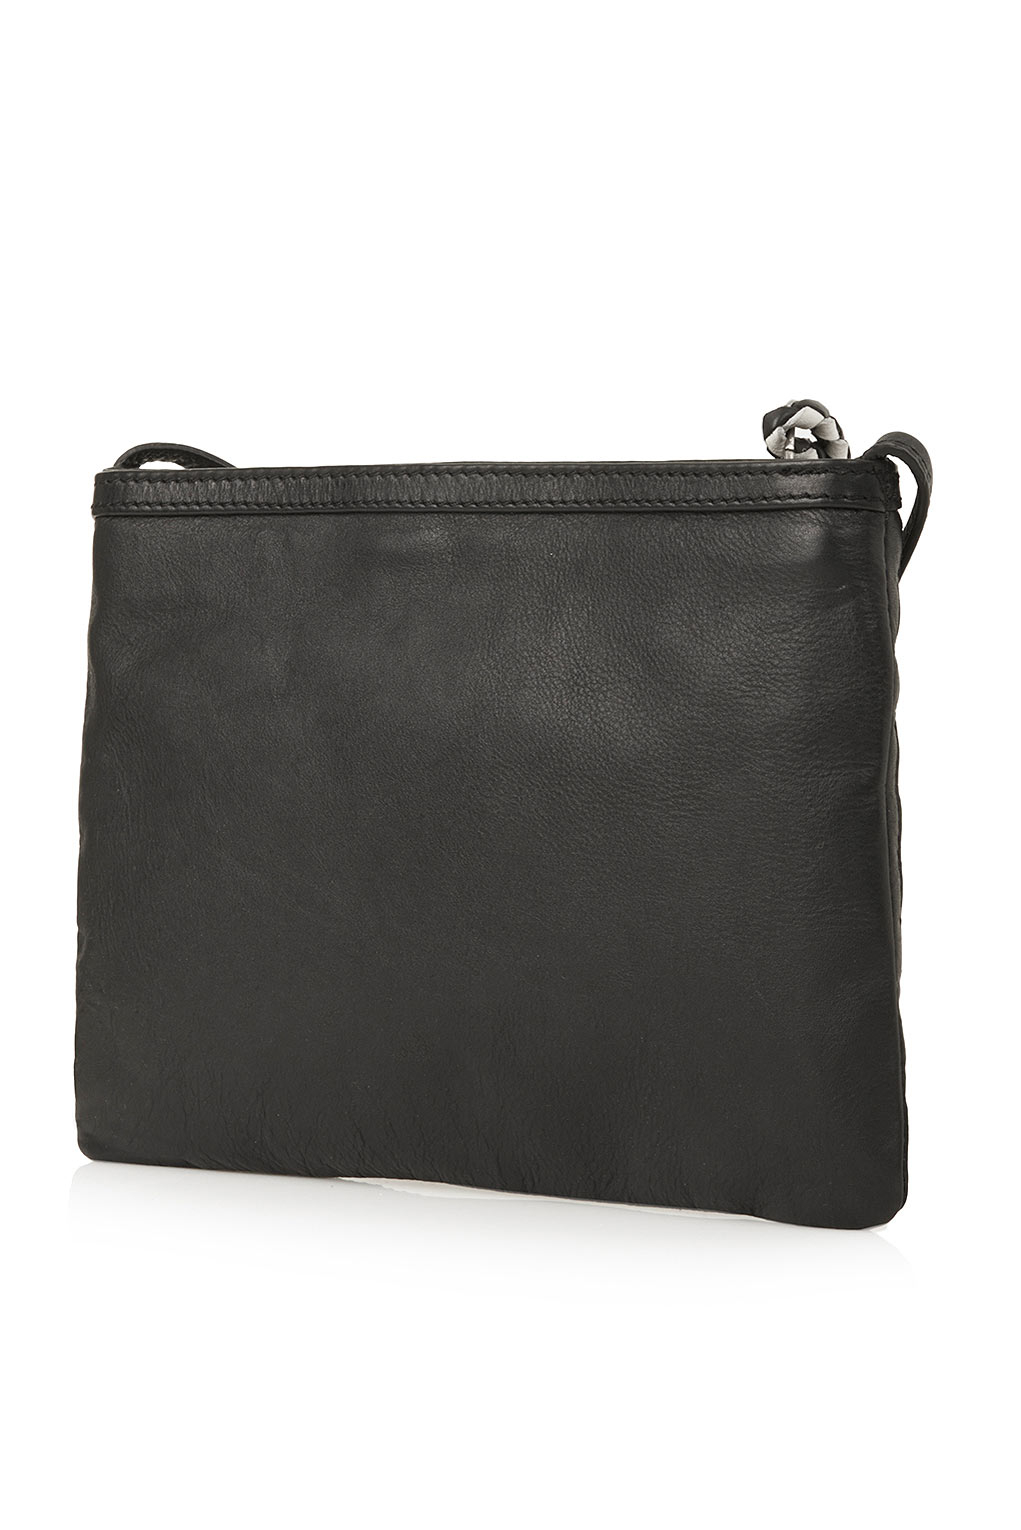 Topshop Leather Woven Tassel Clutch Bag in Black | Lyst